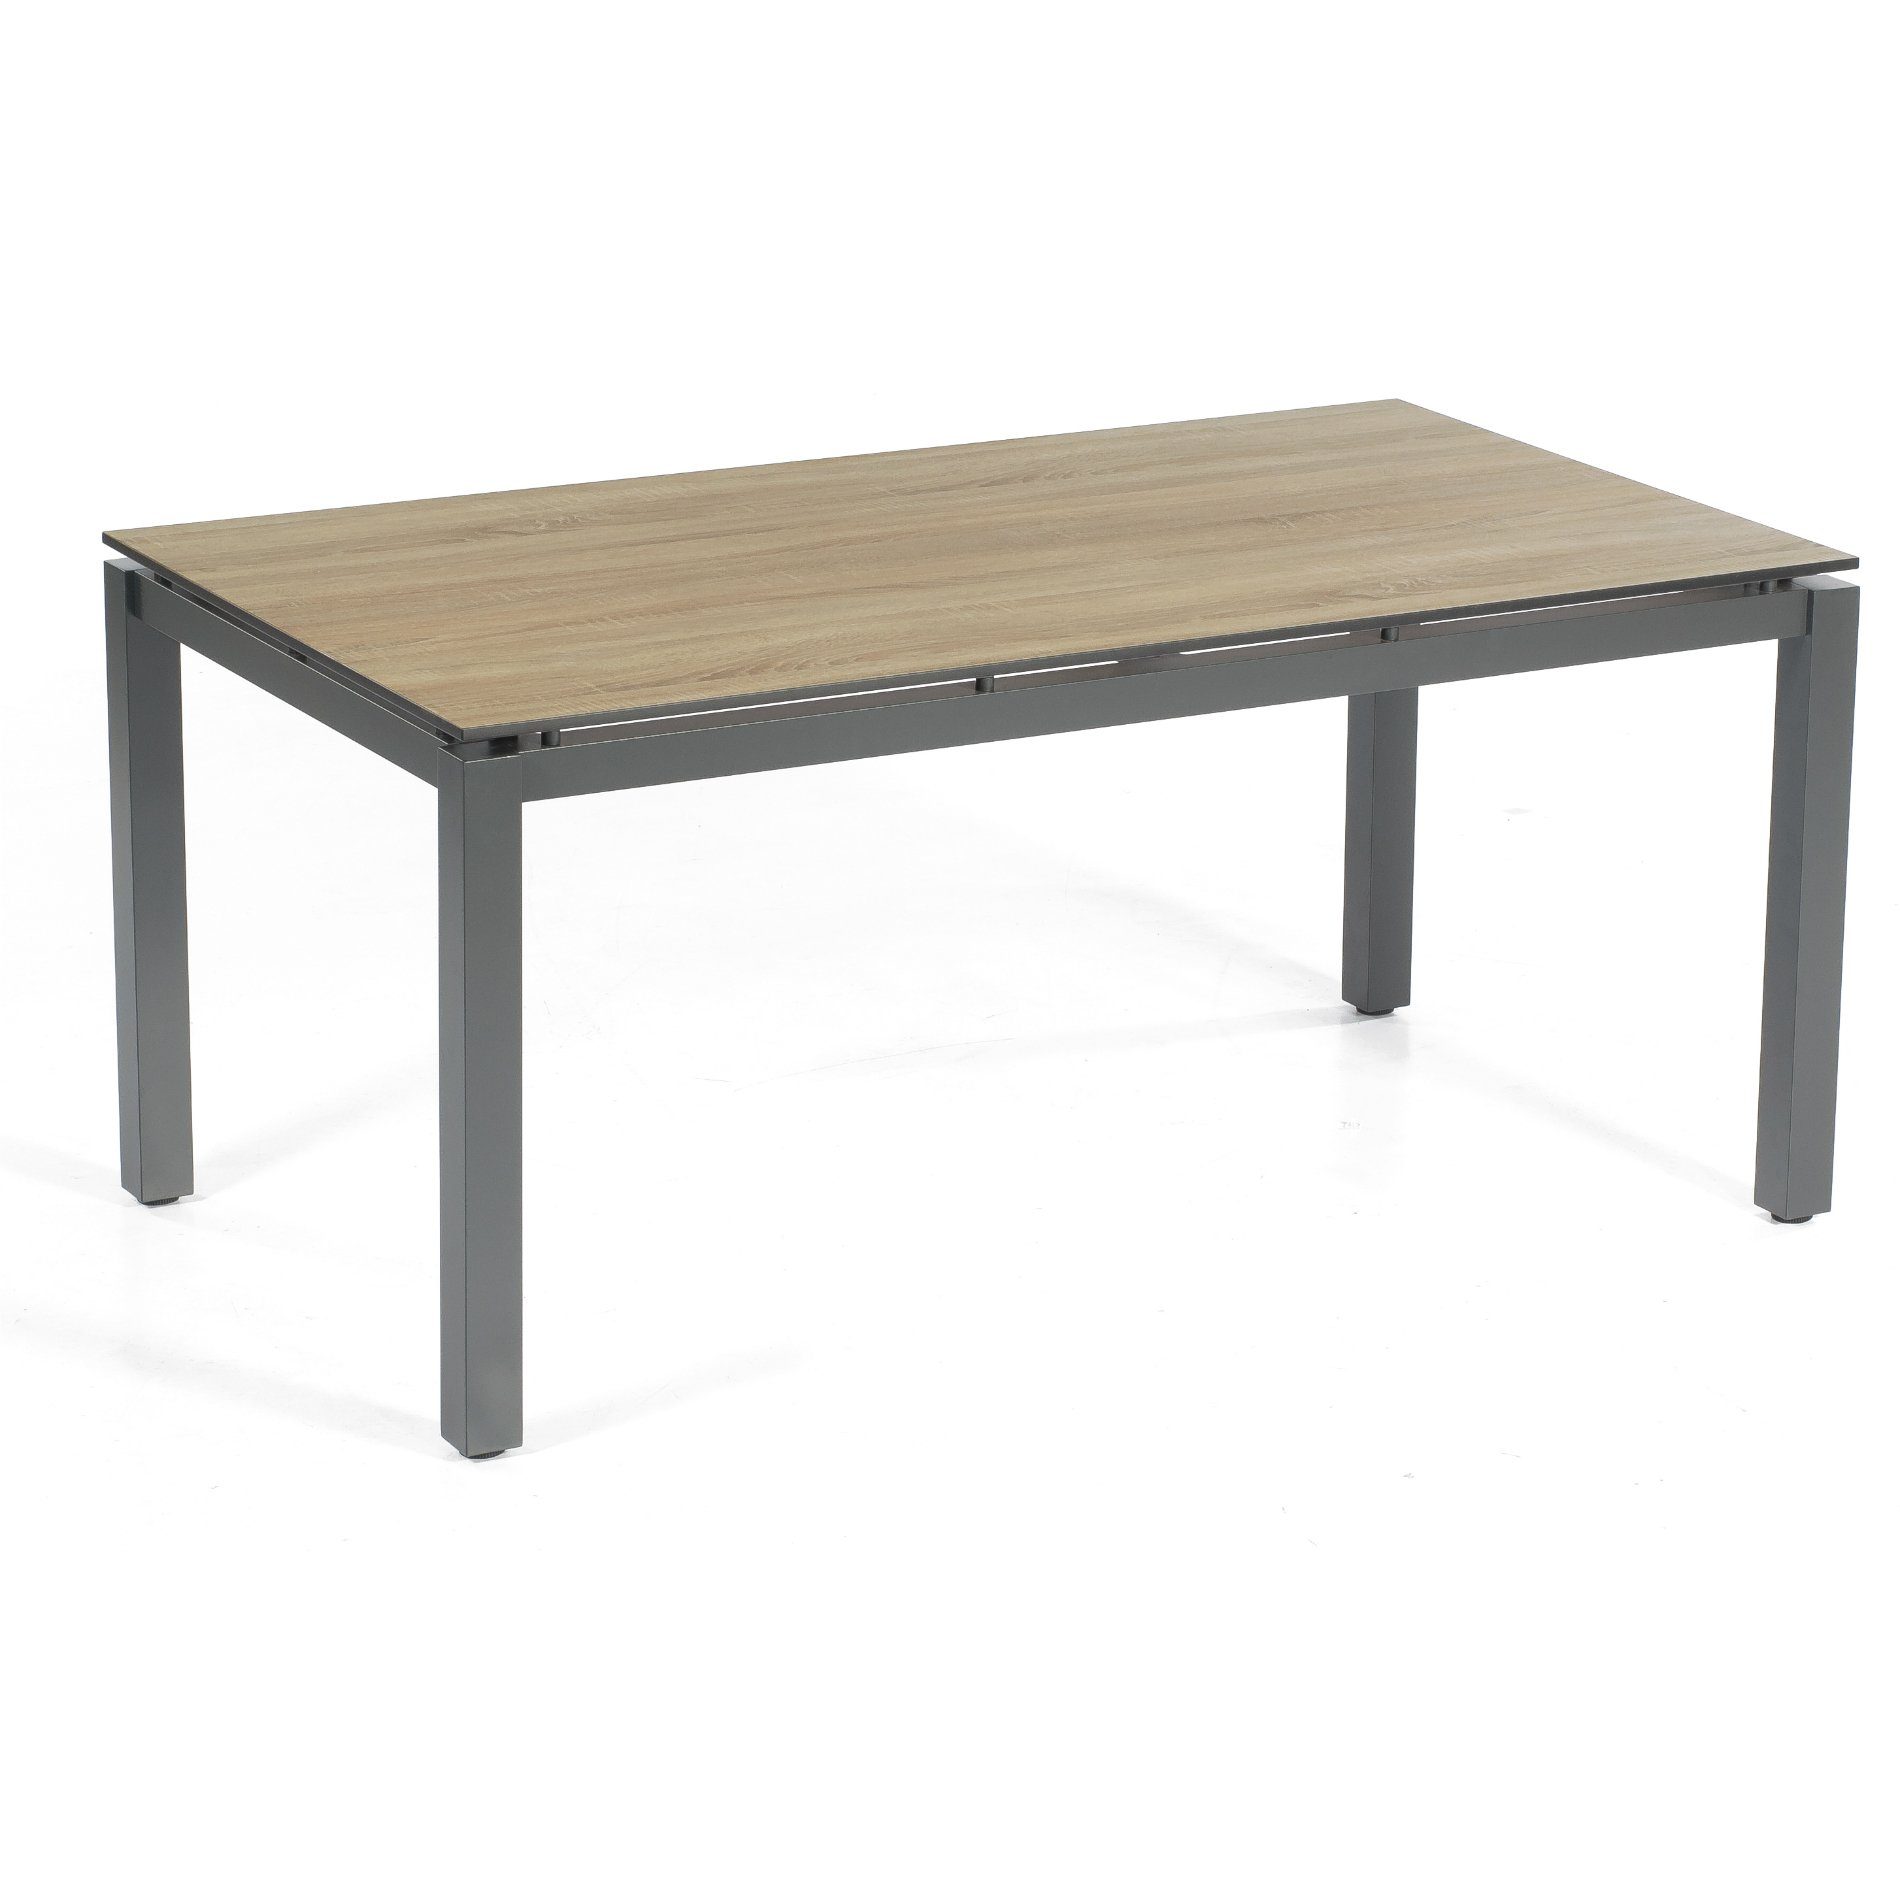 SonnenPartner Tisch 160x90 cm "Base", Gestell Aluminium anthrazit, Tischplatte HPL Eiche sägerau